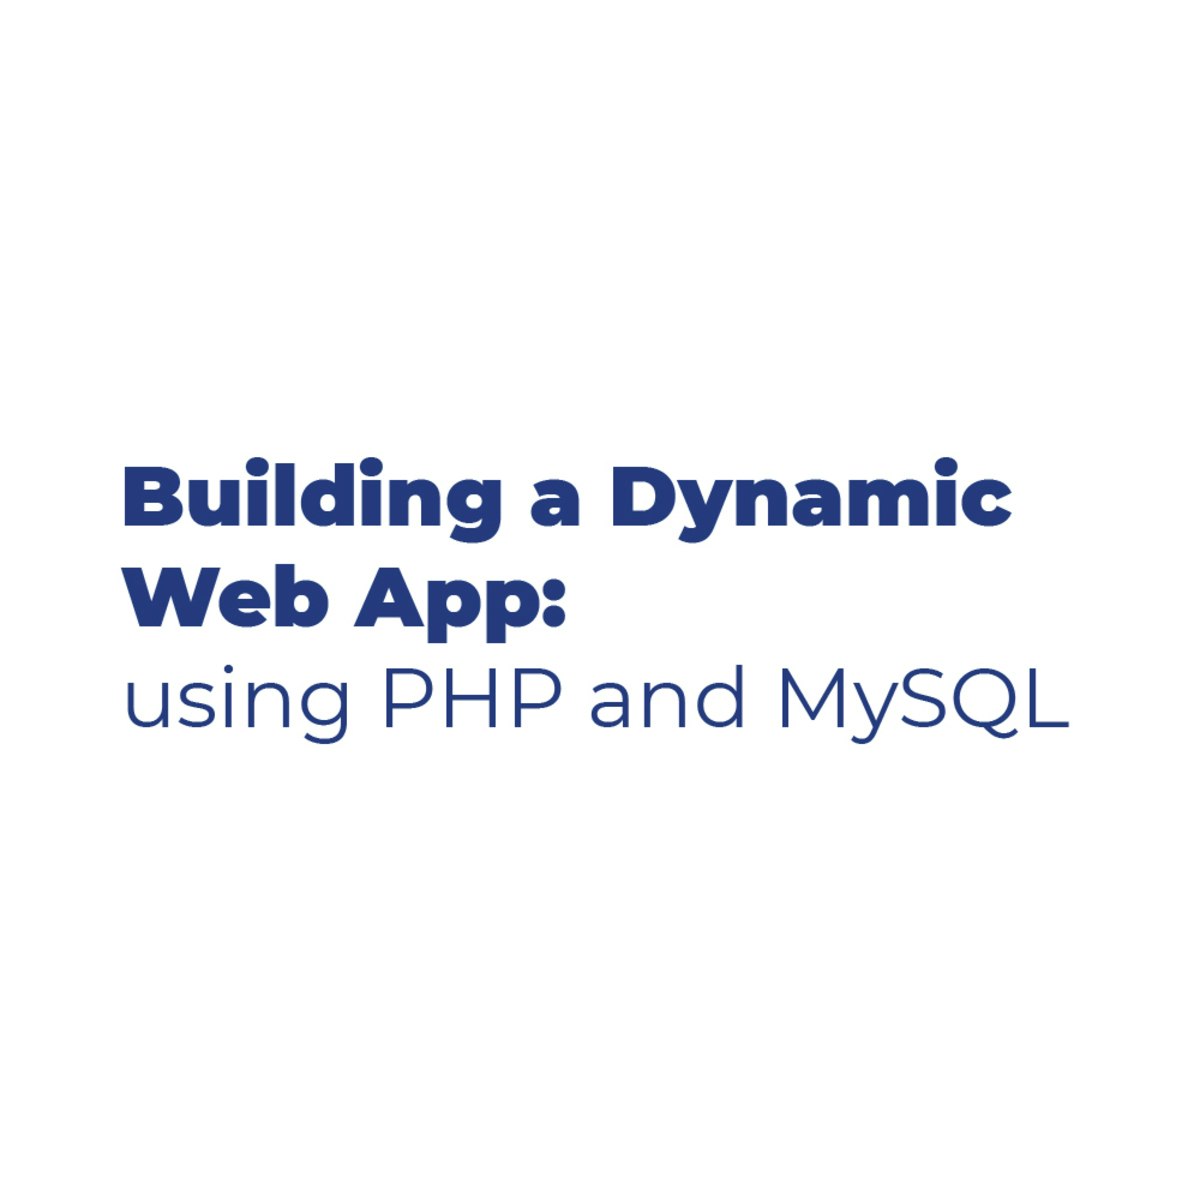 Building a Dynamic Web App using PHP & MySQL